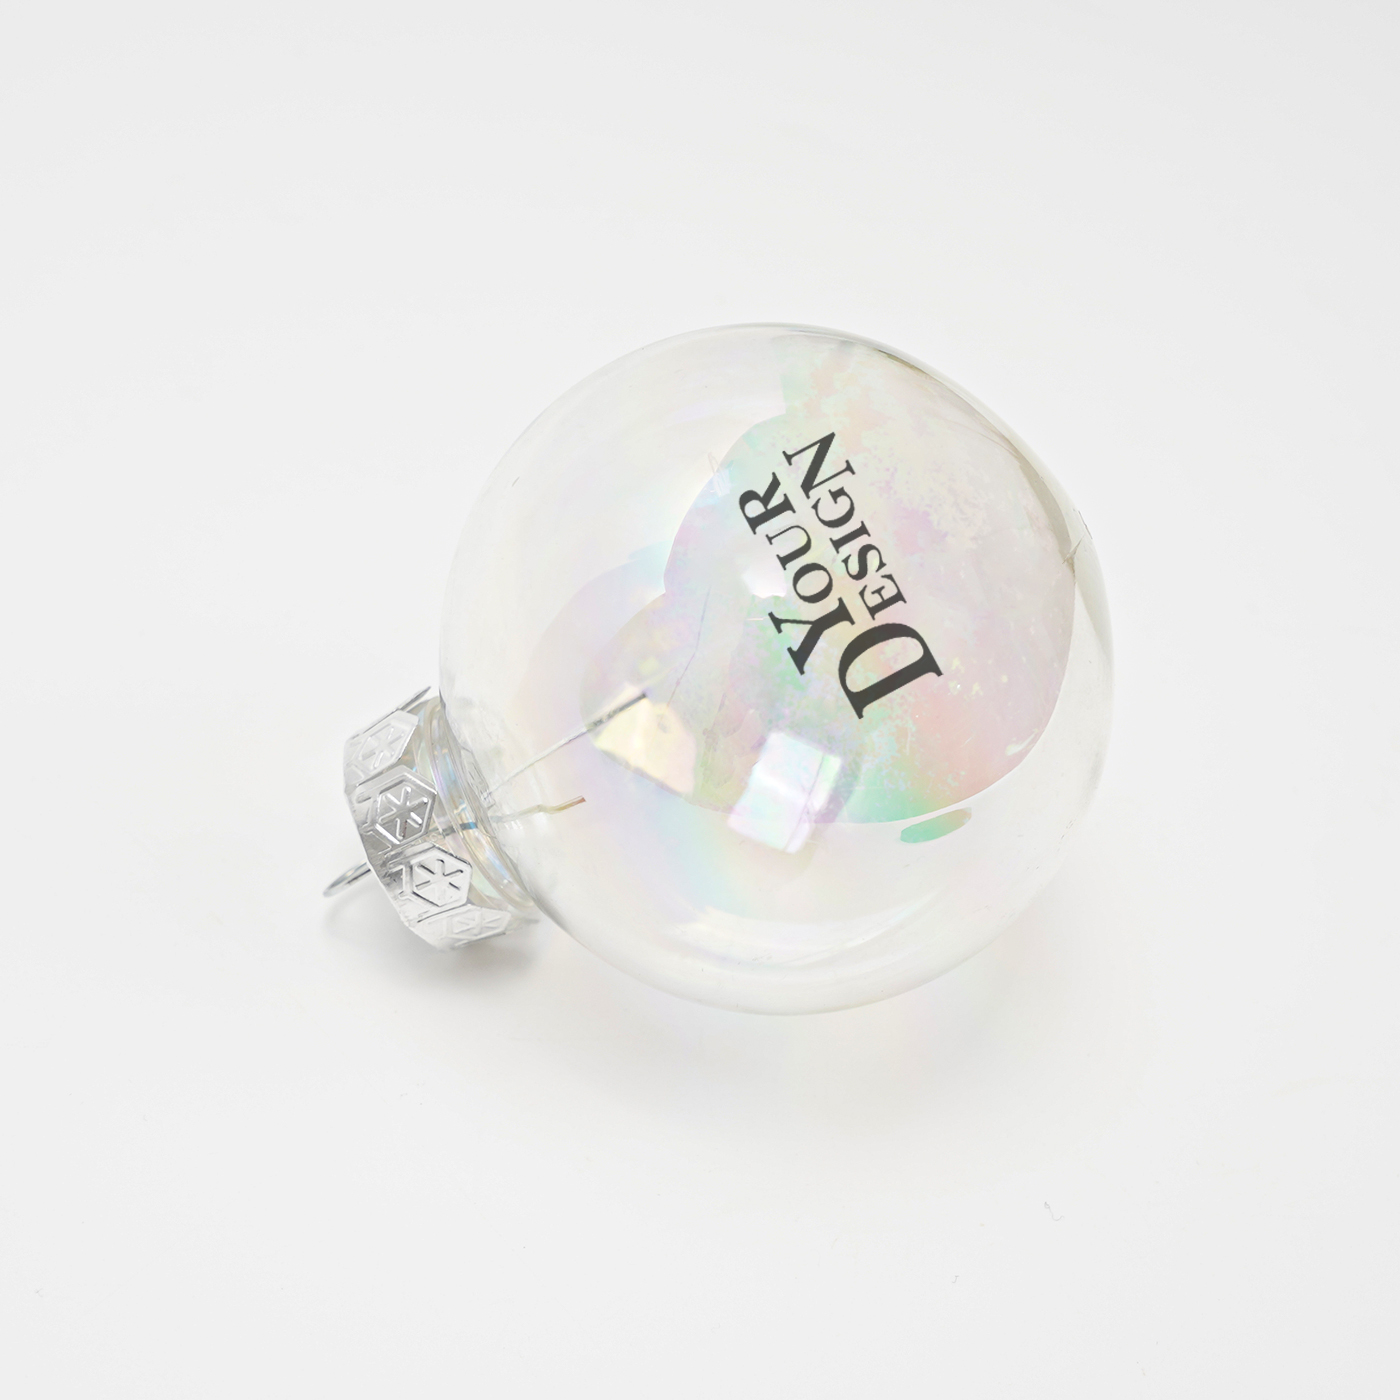 7cm Clear Iridescent Plastic Ball Ornament1